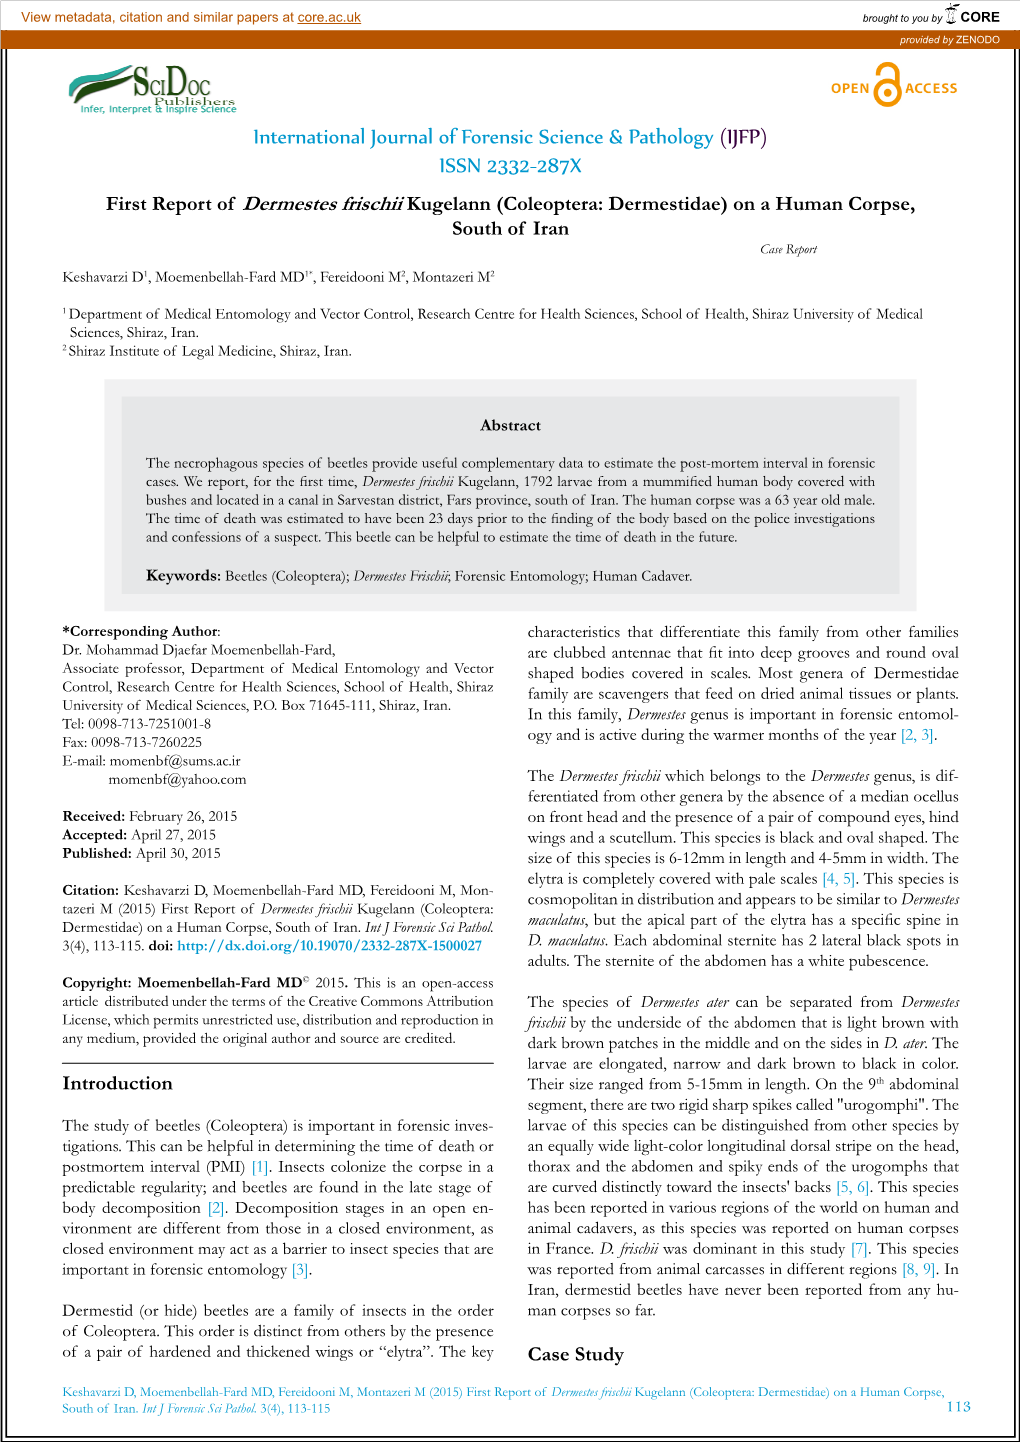 International Journal of Forensic Science & Pathology